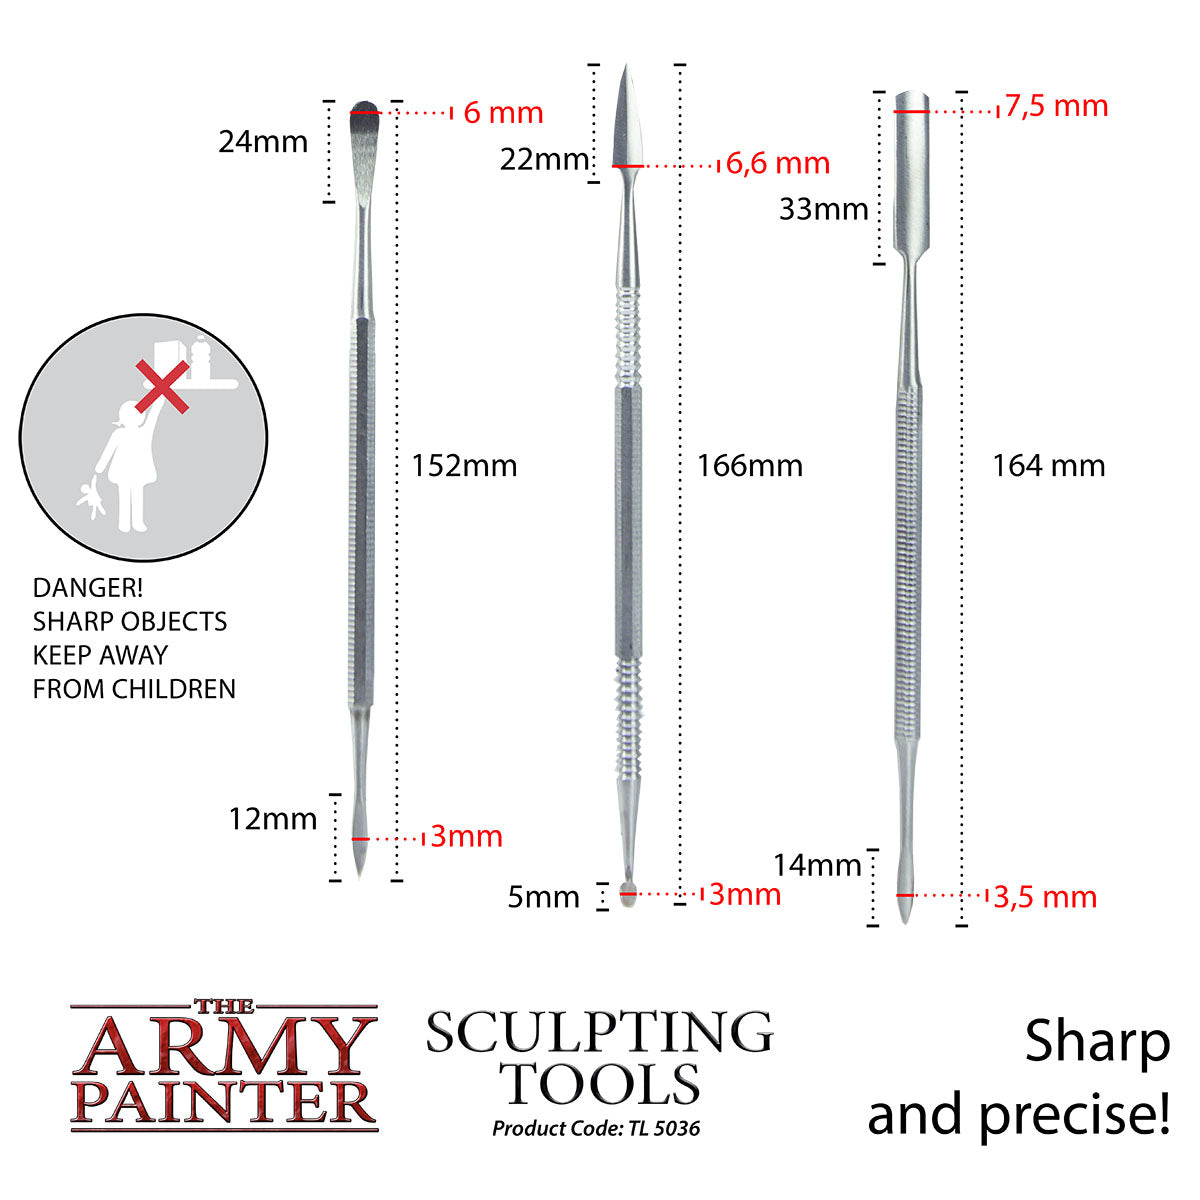  The Army Painter Tweezer - 2-Piece Precision Tweezers Set of  Sharp Tweezers Precision & Fine Pointed Tweezers for Assembling Miniatures-  Small Crafting Tweezers: 95 mm Flat Tip & 103 mm Pointy